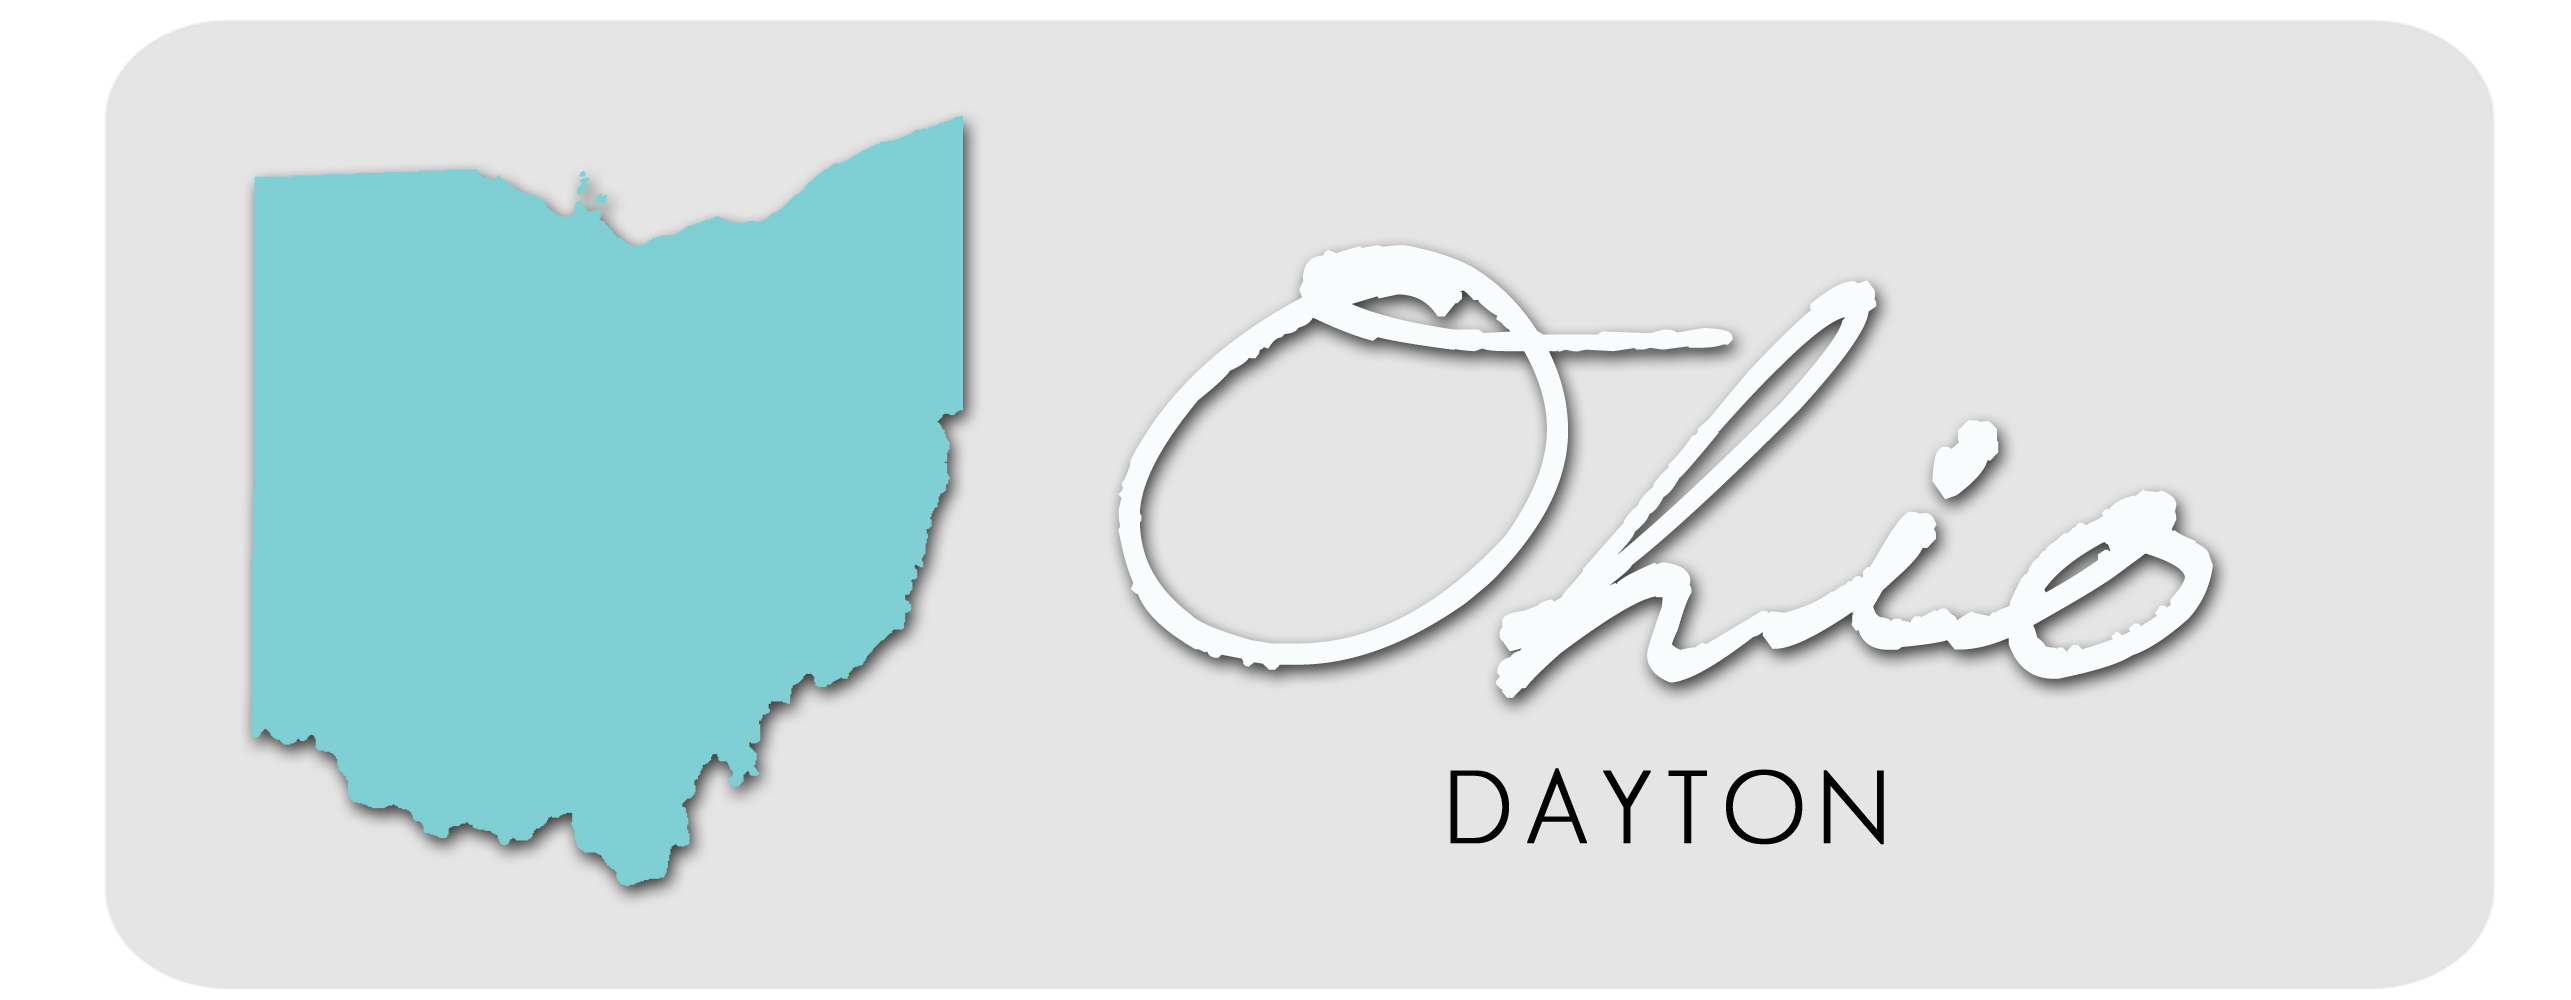 Dayton Health Insurance